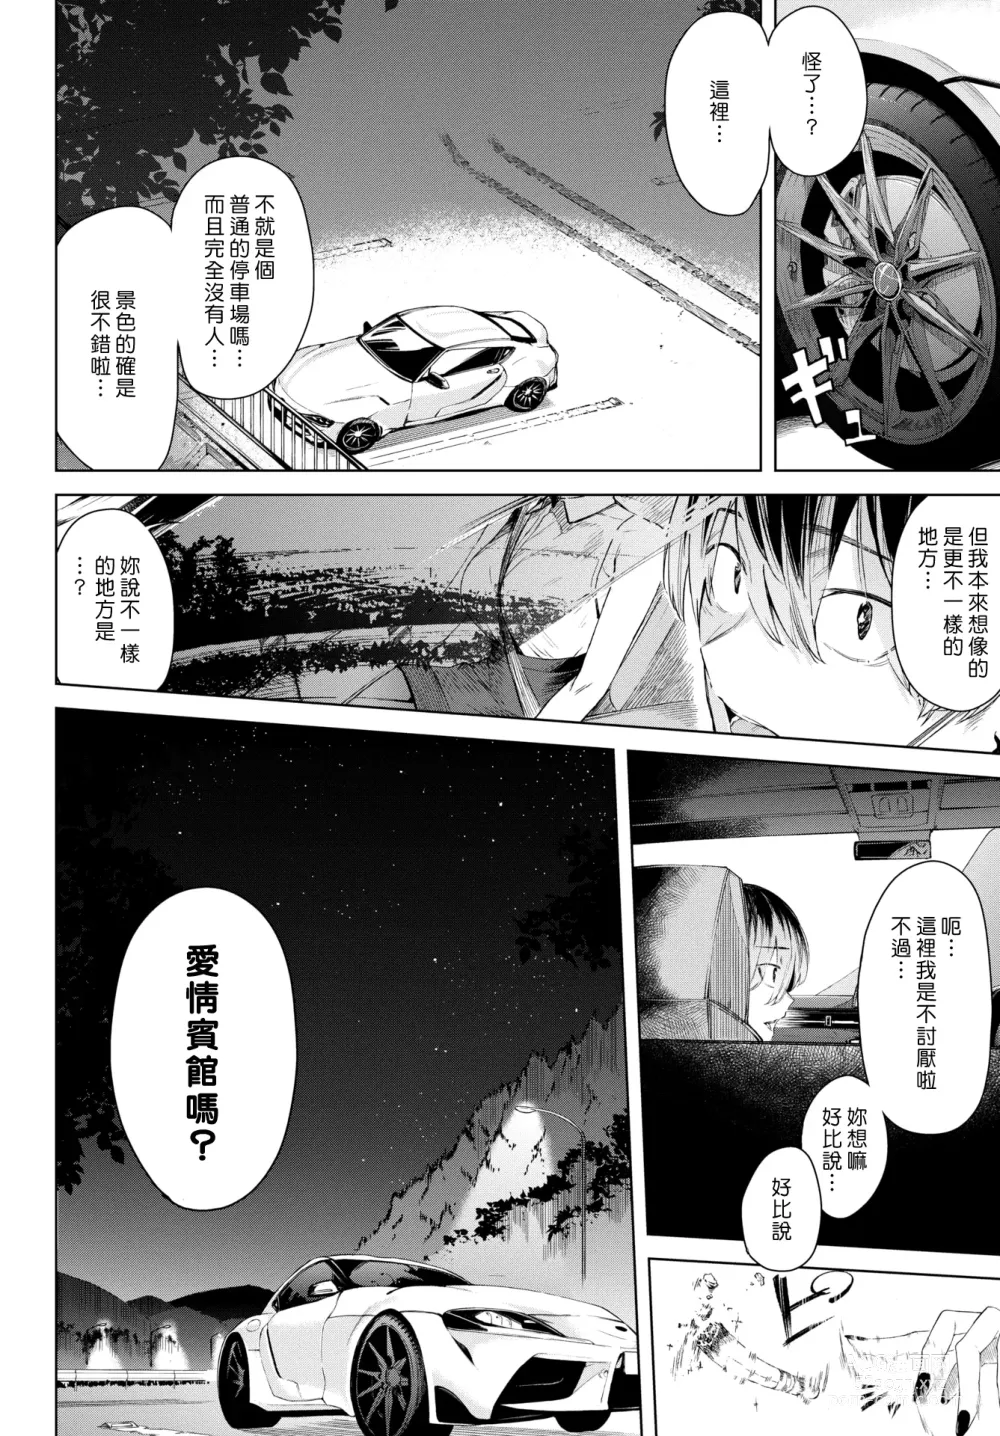 Page 4 of manga 跨越護欄吧